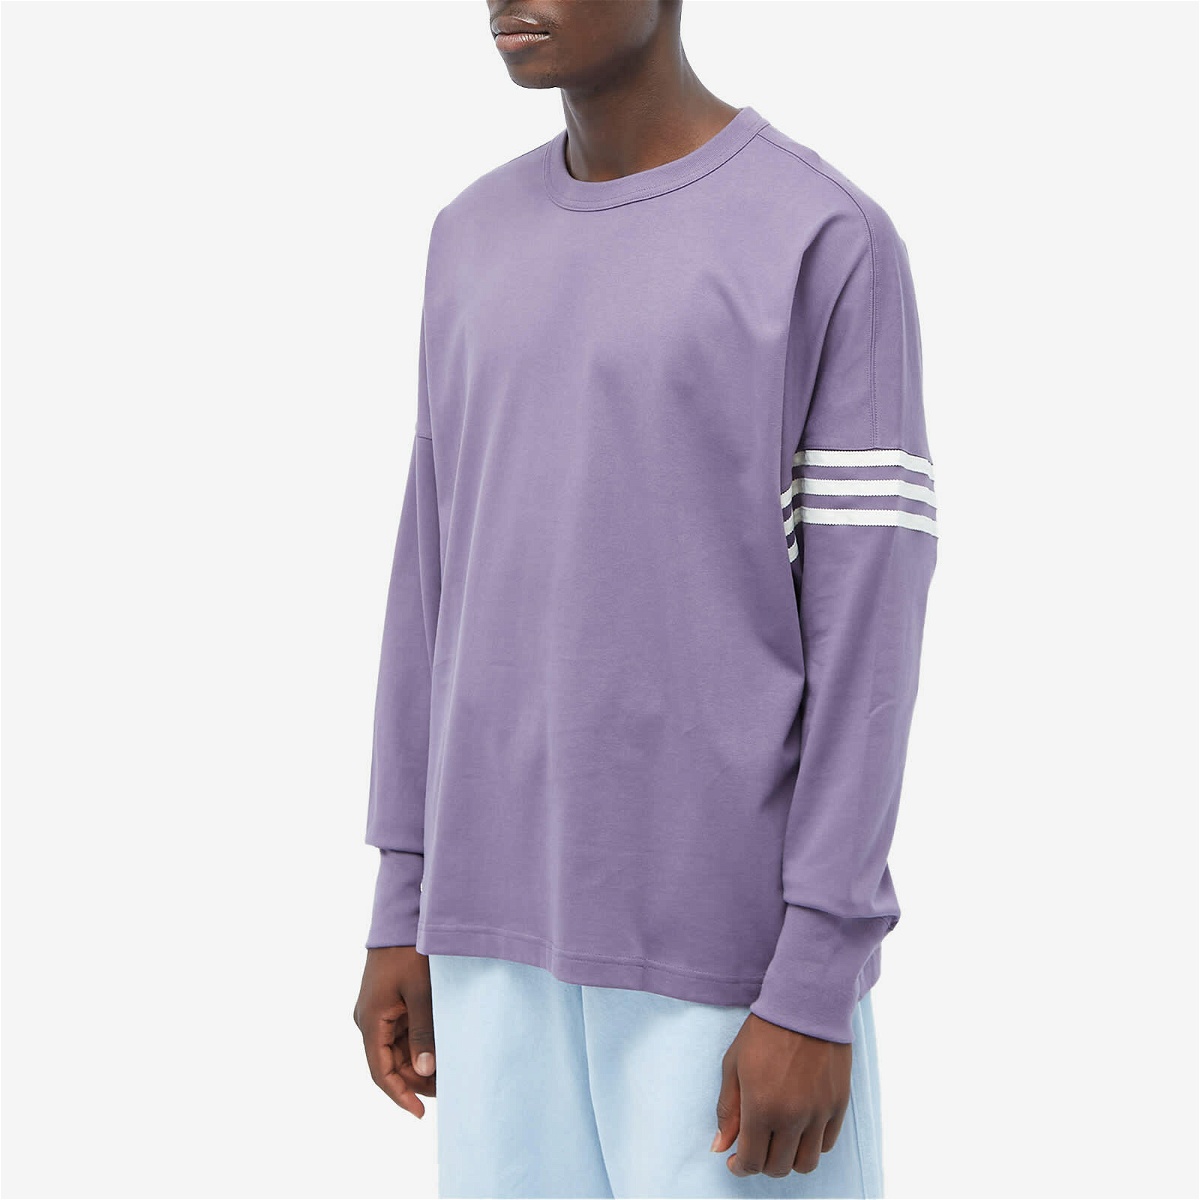 Adidas Men\'s Long Sleeve T-Shirt Shadow Violet Neuclassics adidas in